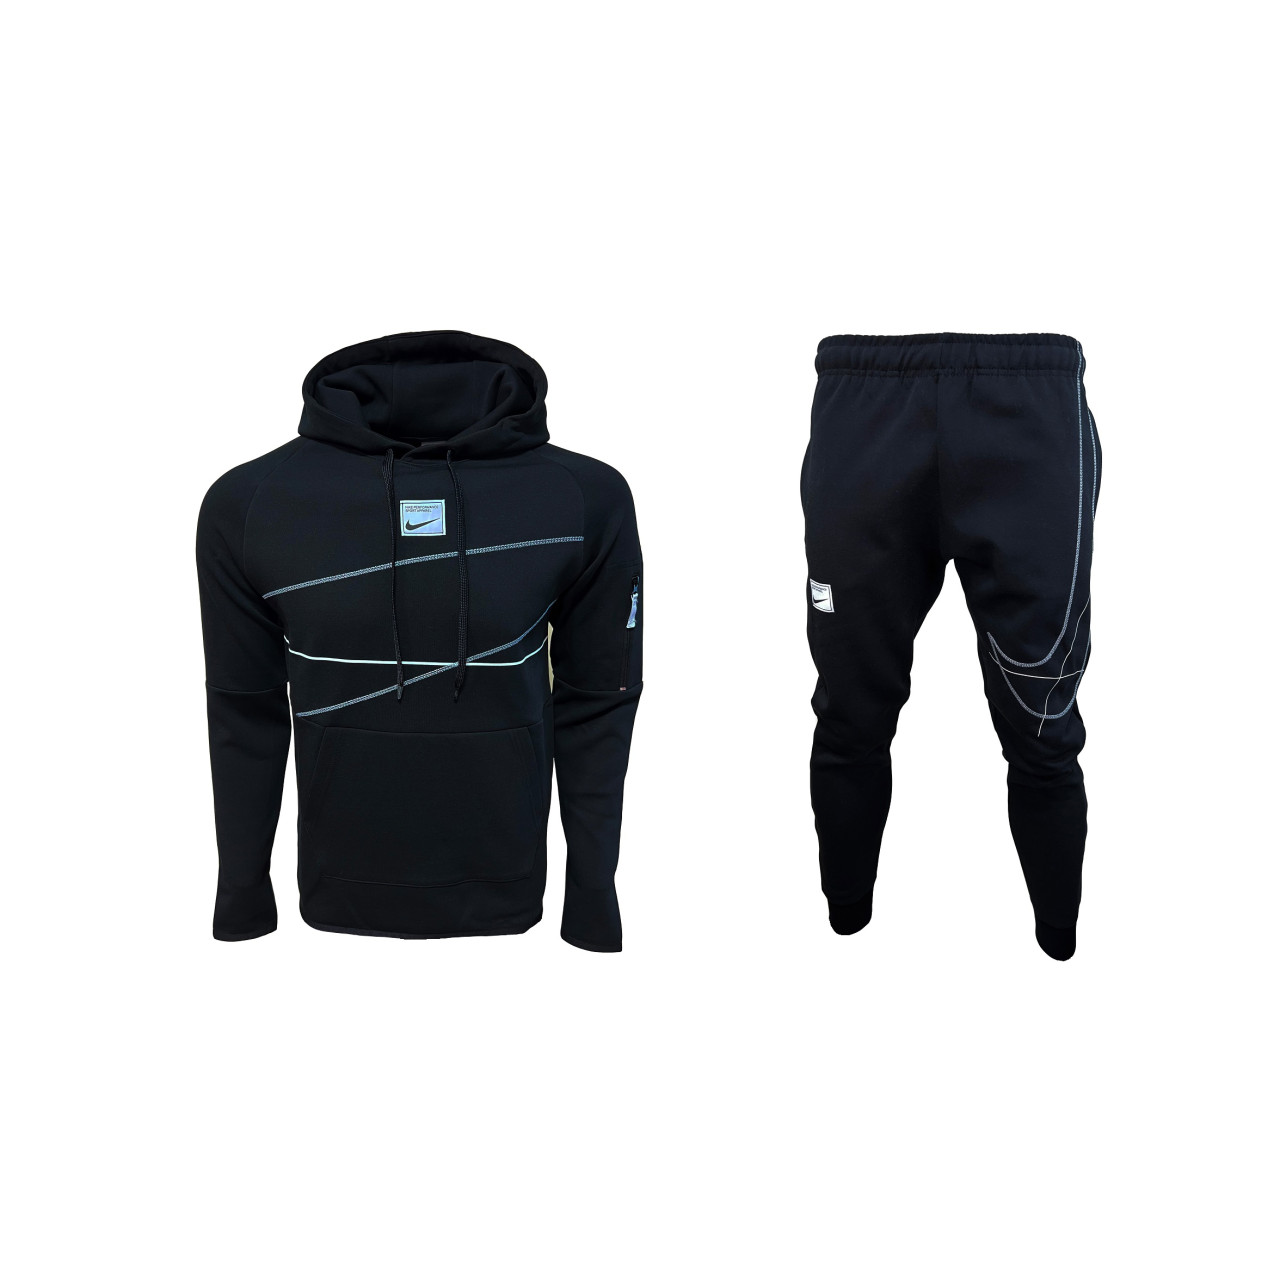 Nike Performance Sweatshirt + Pants Black